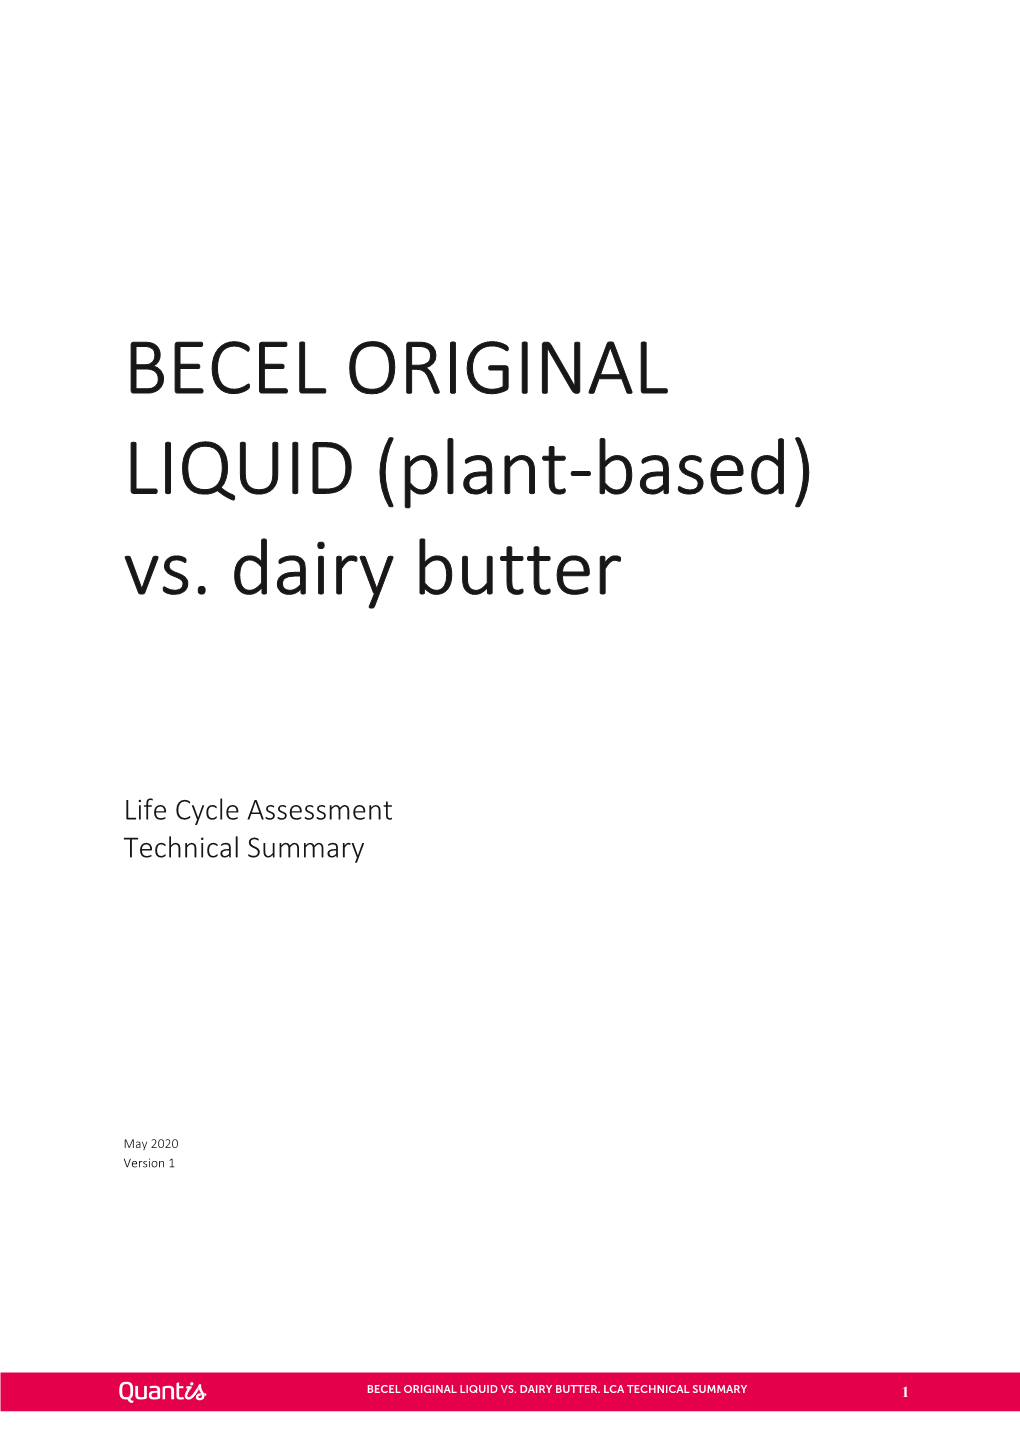 BECEL ORIGINAL LIQUID (Plant-Based) Vs. Dairy Butter